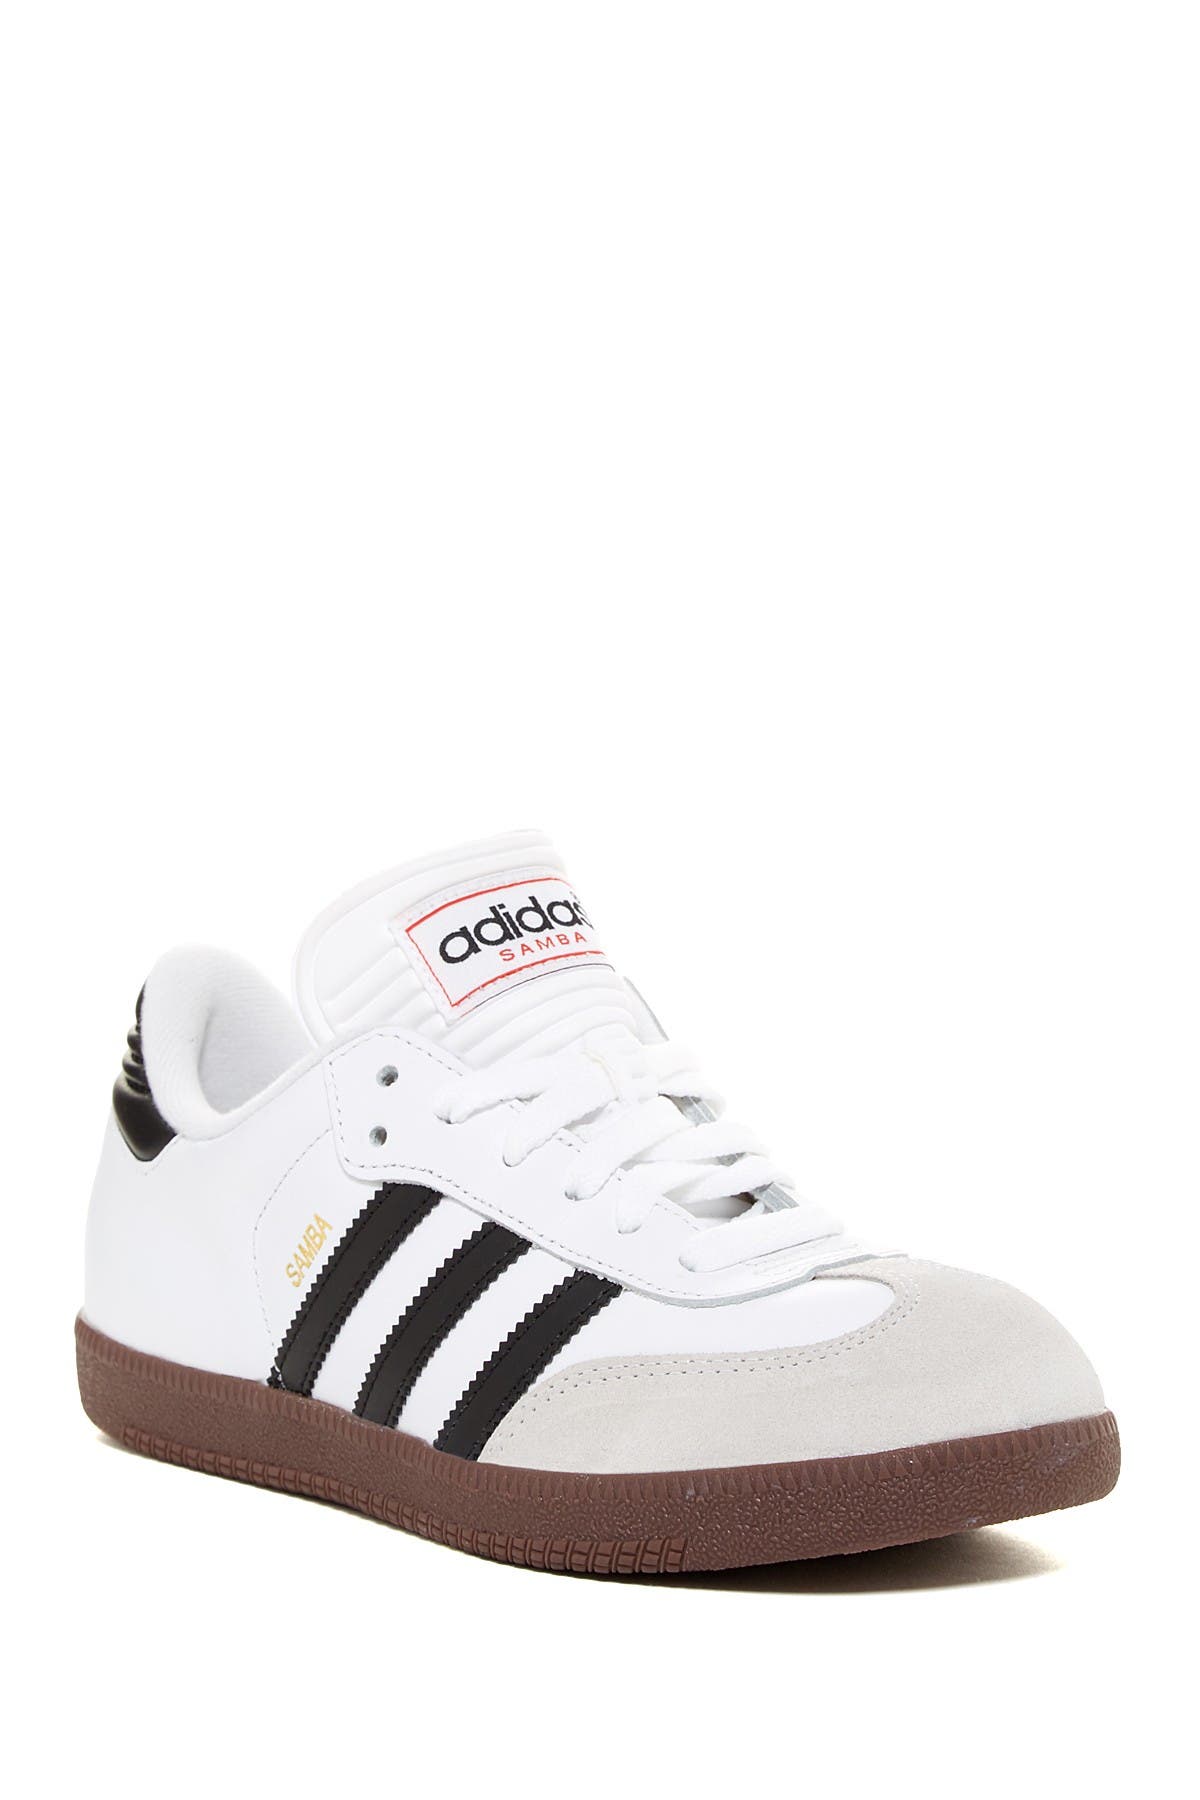 adidas 'Samba' Sneaker (Big Kid 